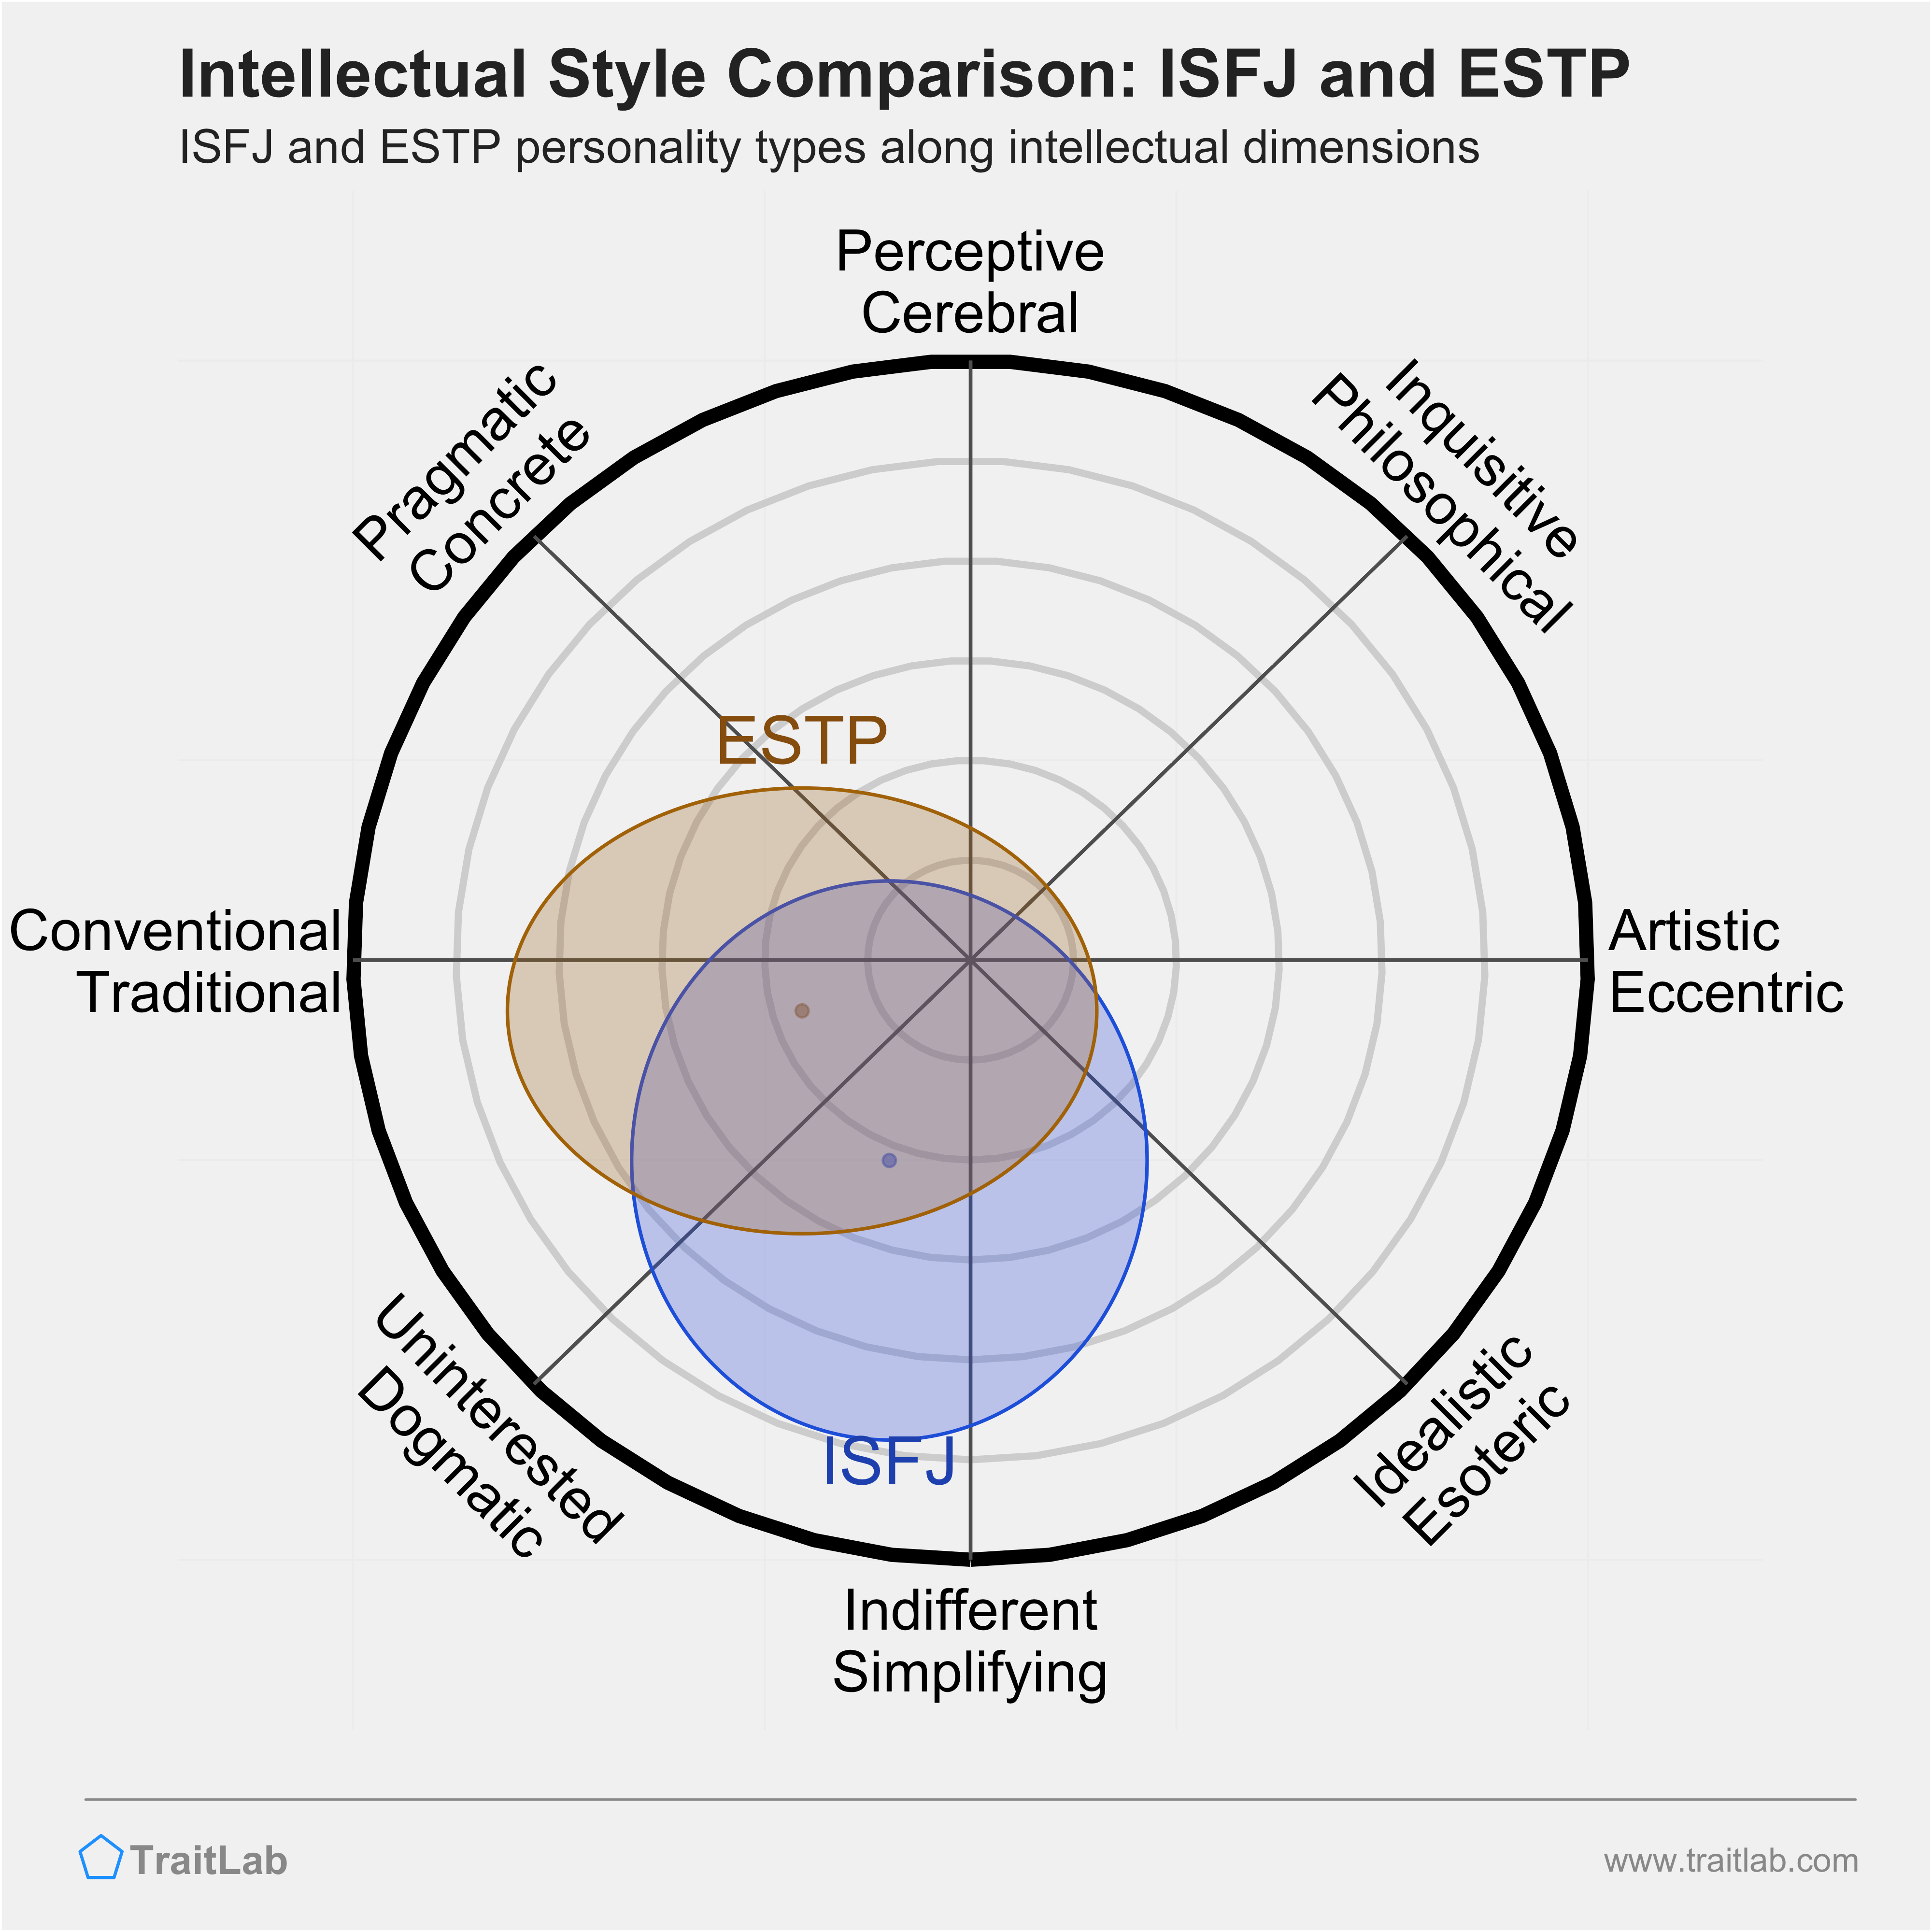 ISFJ and ESTP comparison across intellectual dimensions